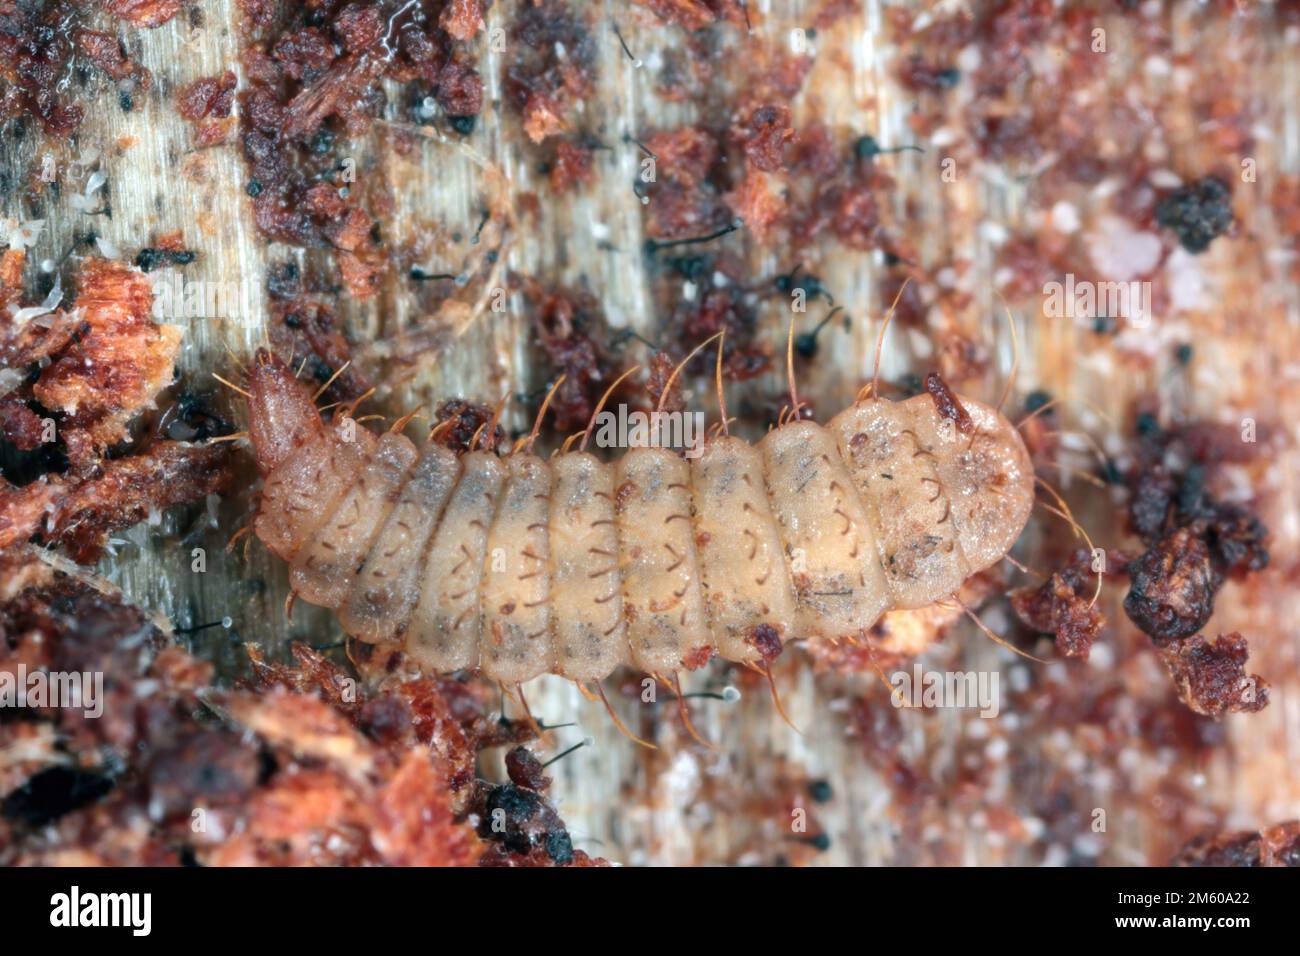 Larva a mosca soldato su legno marcio (Stratiomyidae) Foto Stock